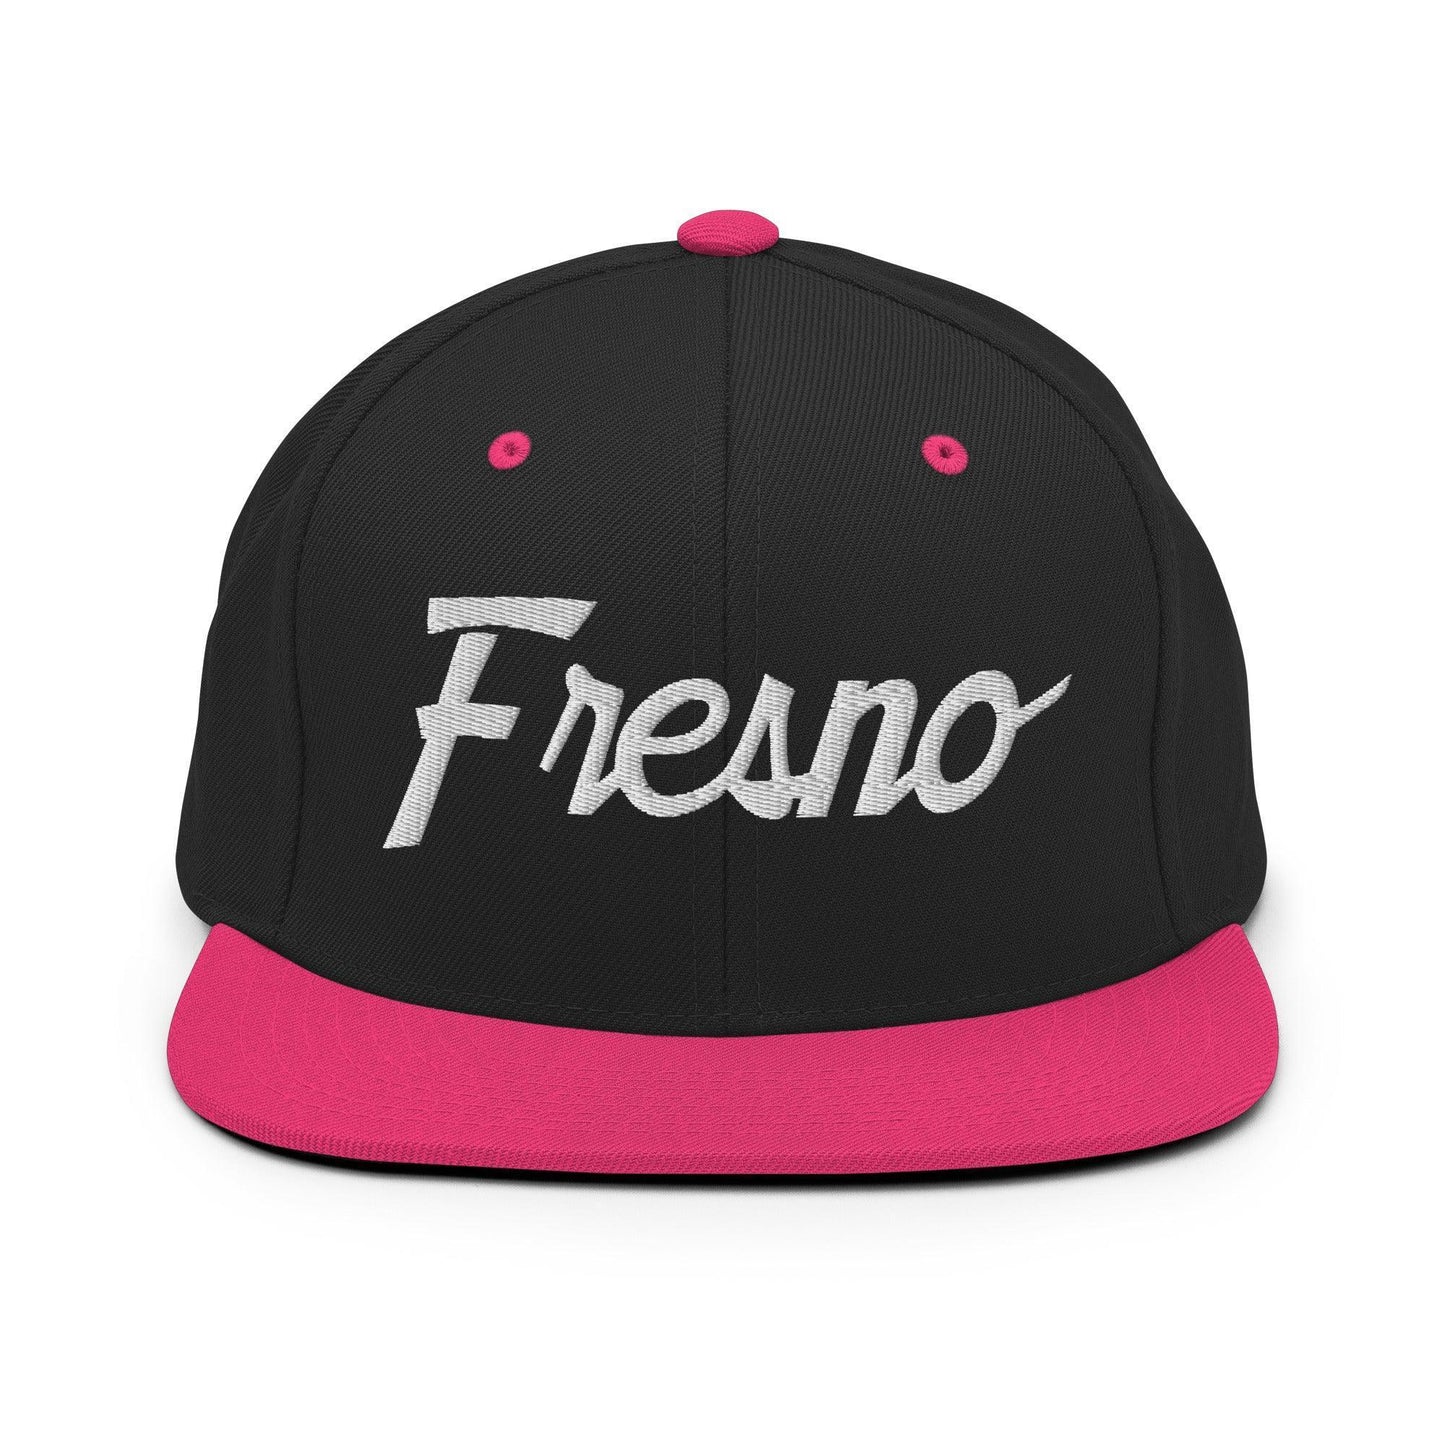 Fresno Script Snapback Hat Black Neon Pink